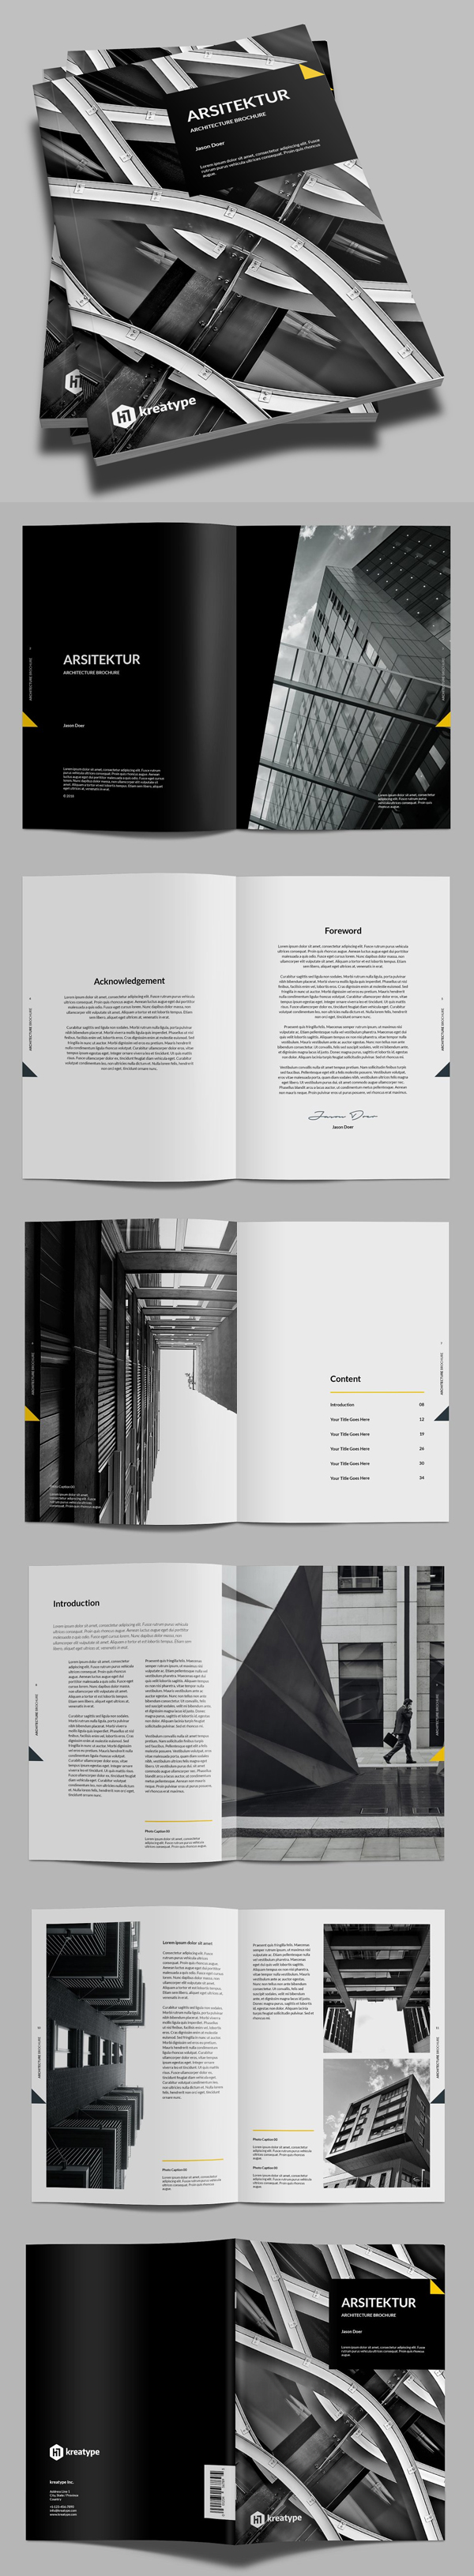 Kreatype Multipurpose Brochure